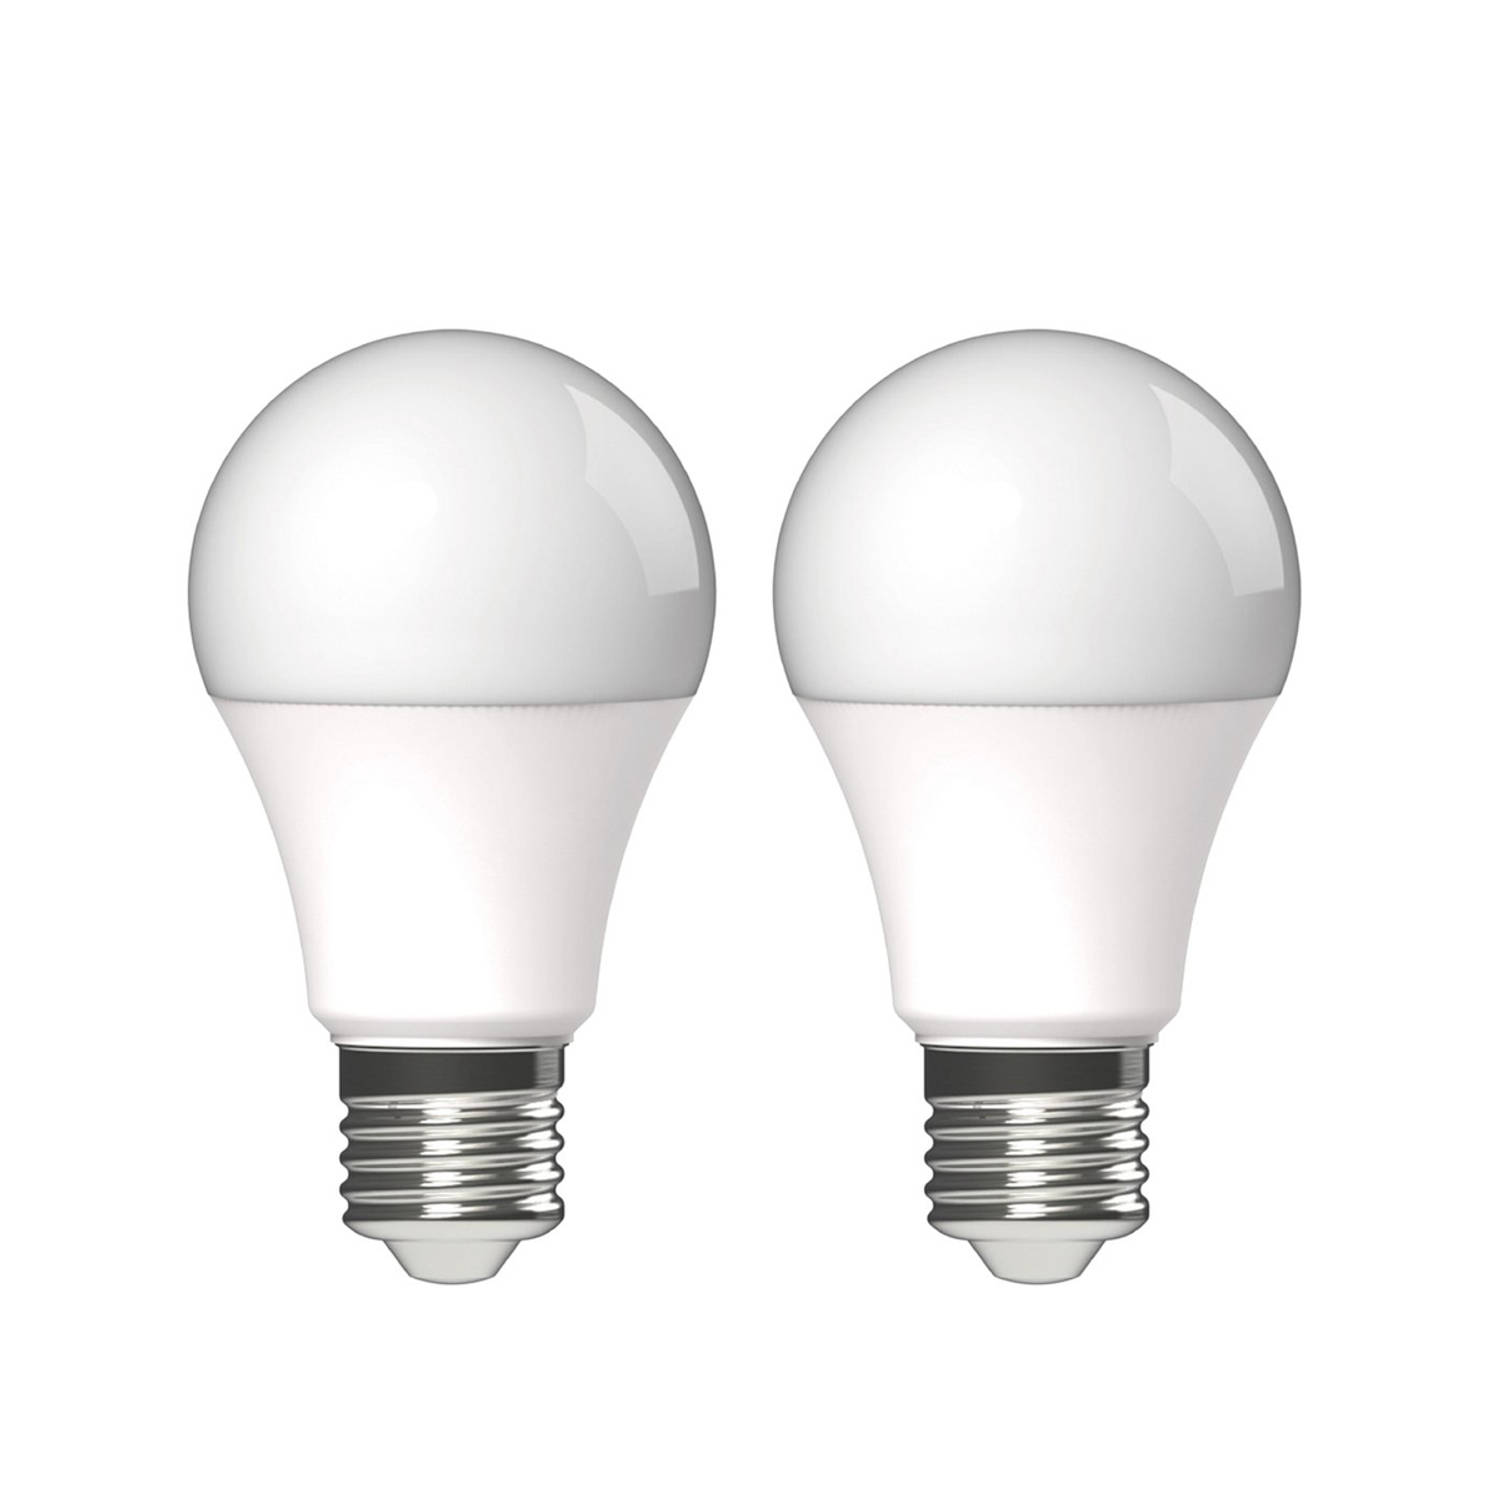 Proventa POWER LED Lamp E27 Peer - Warm wit licht - 11W vervangt 75W - 2 lampen